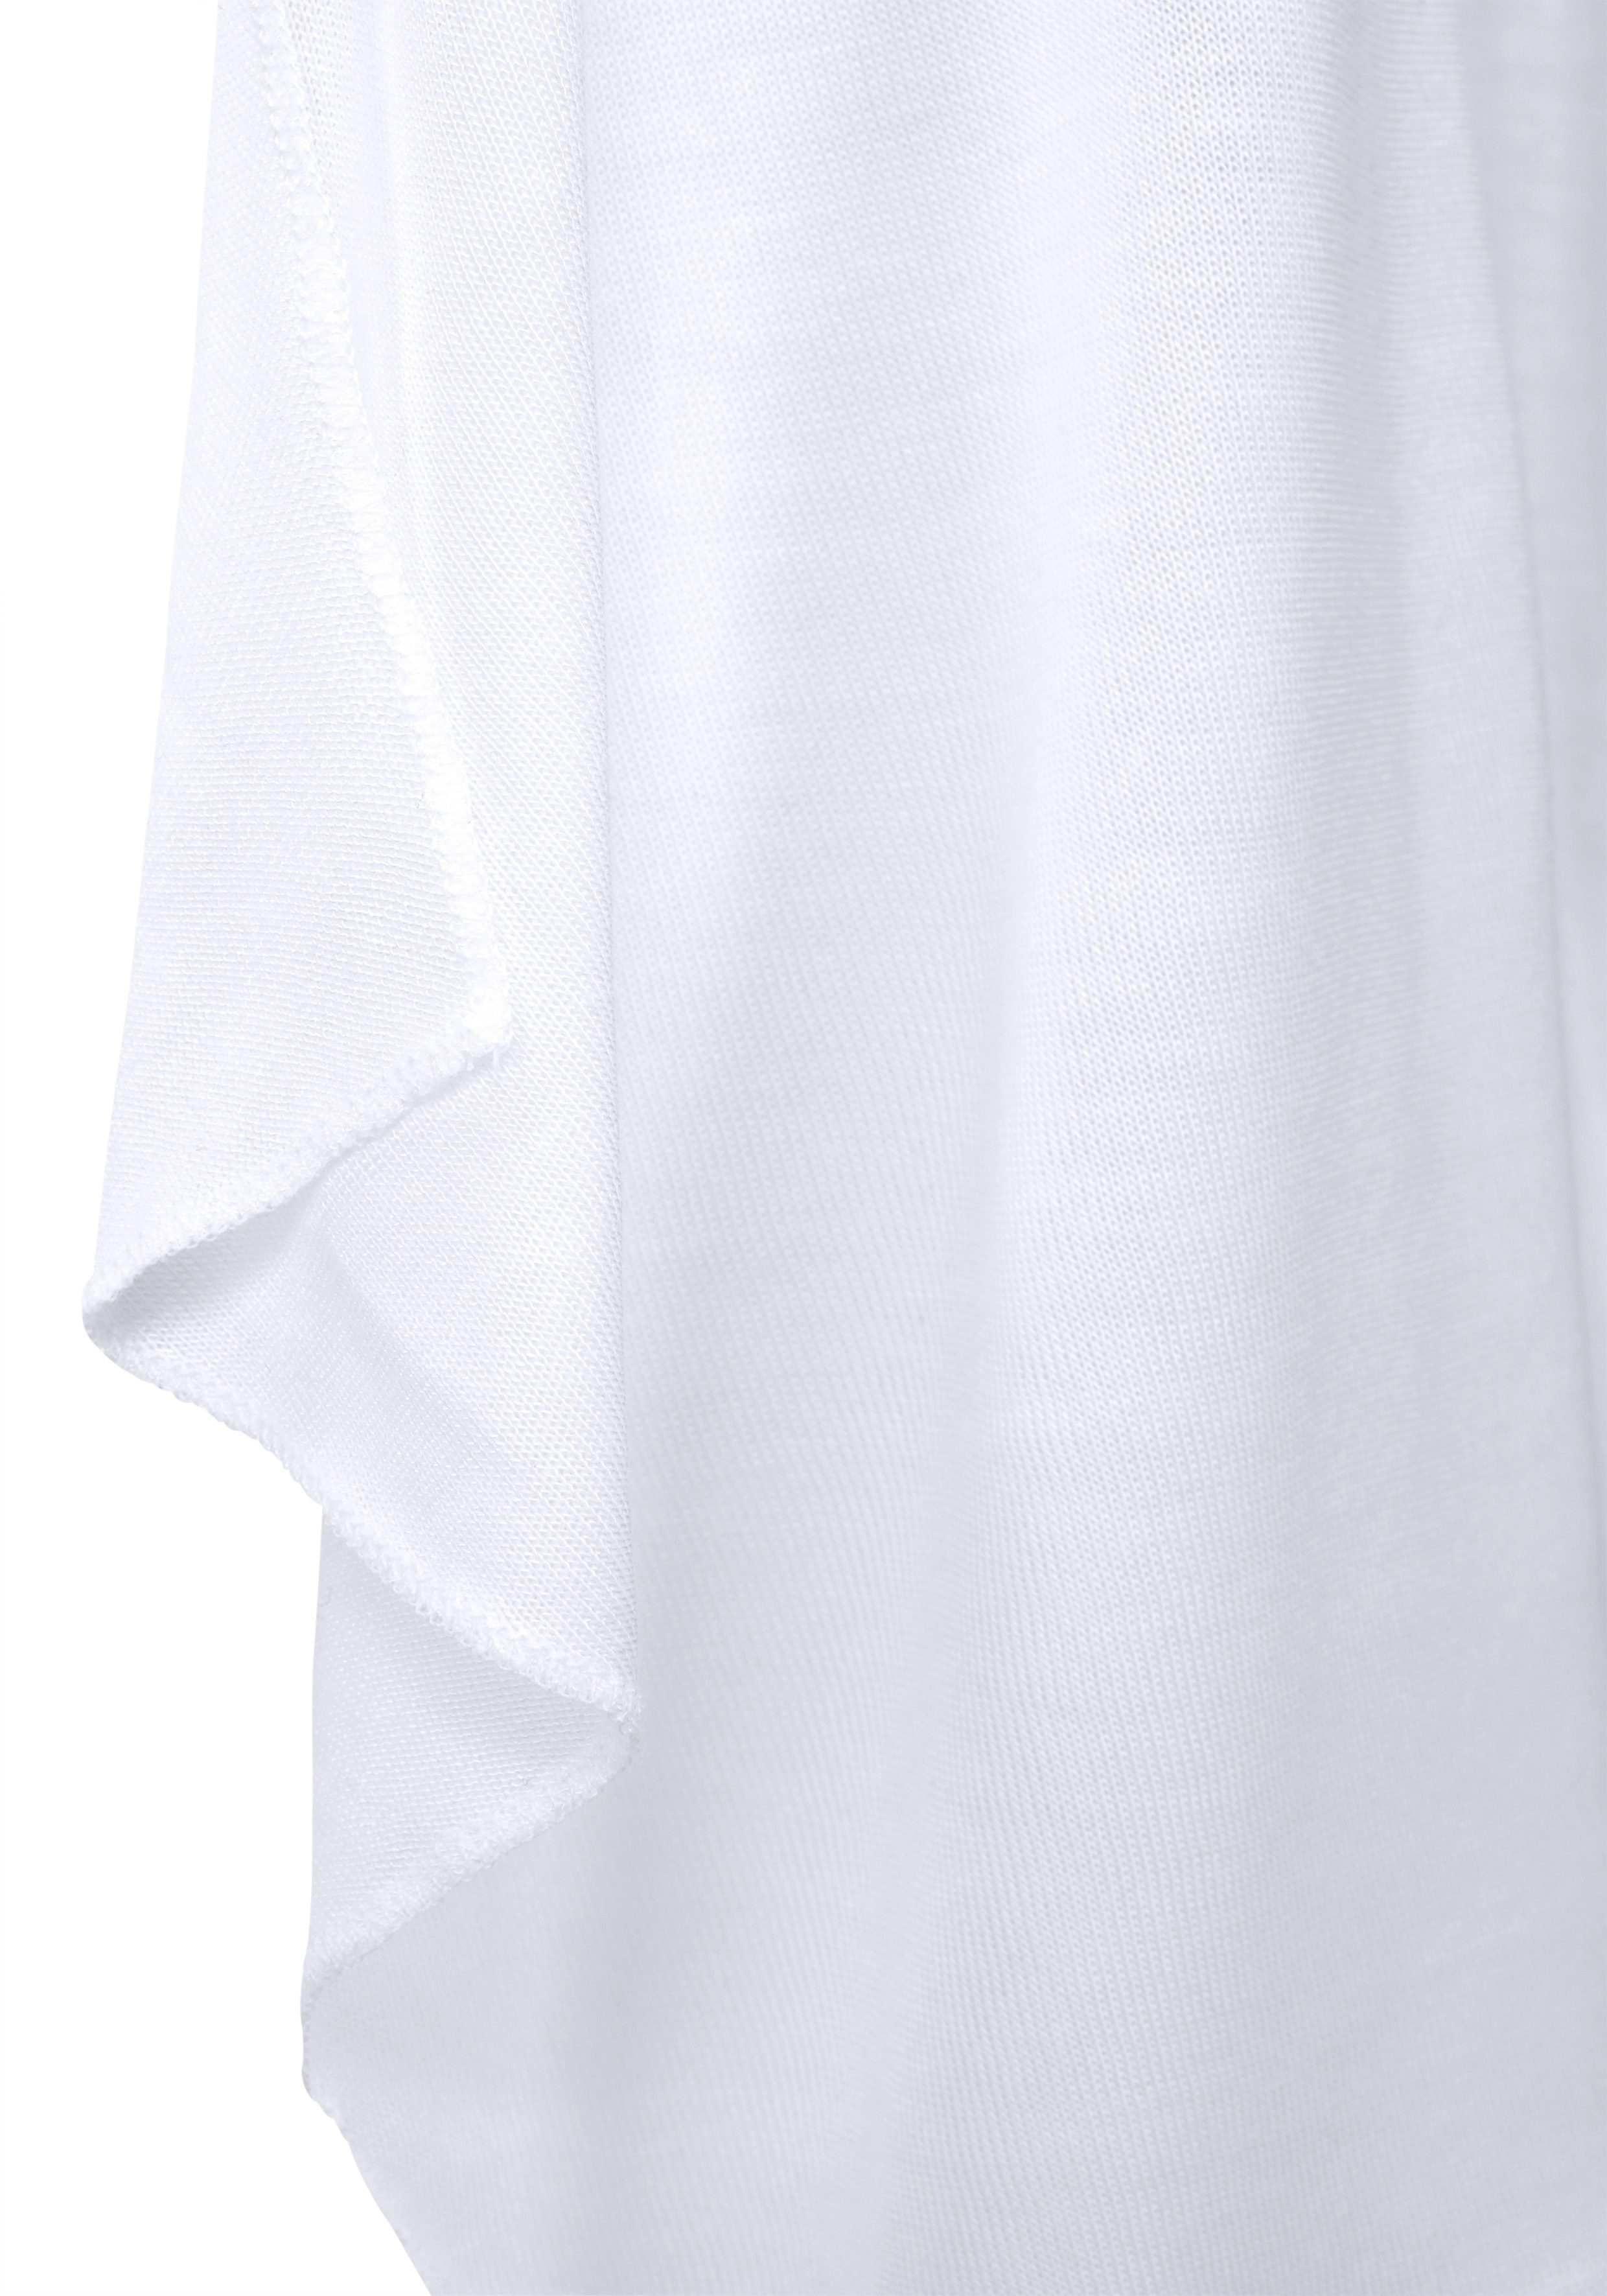 LASCANA Shirtjacke in offener weiß Form